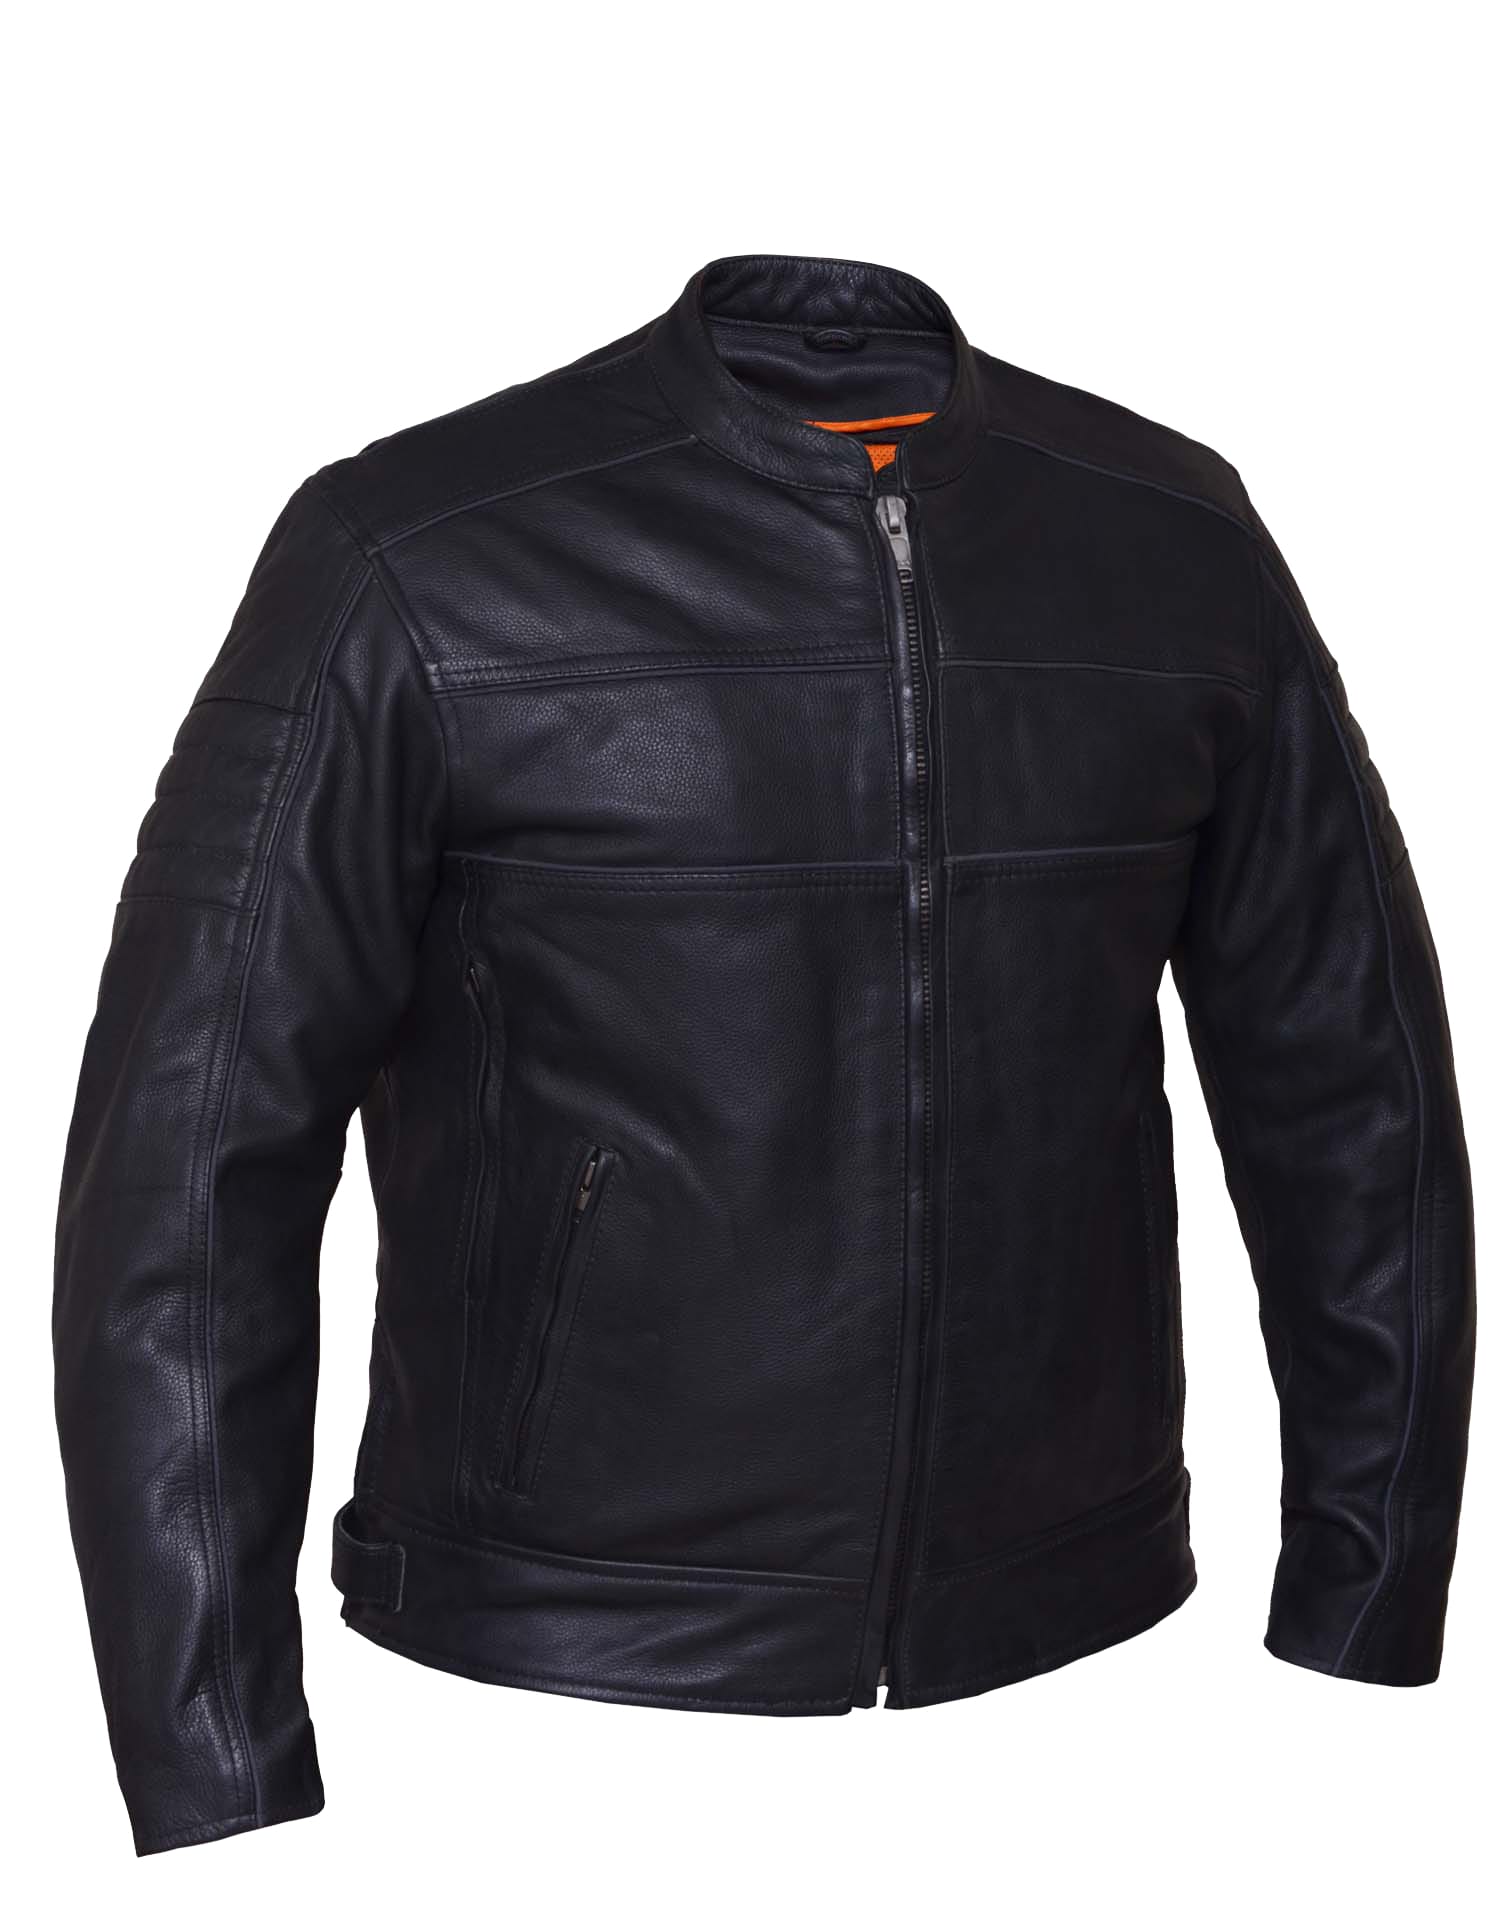 Men's Premium Motorcycle jacket